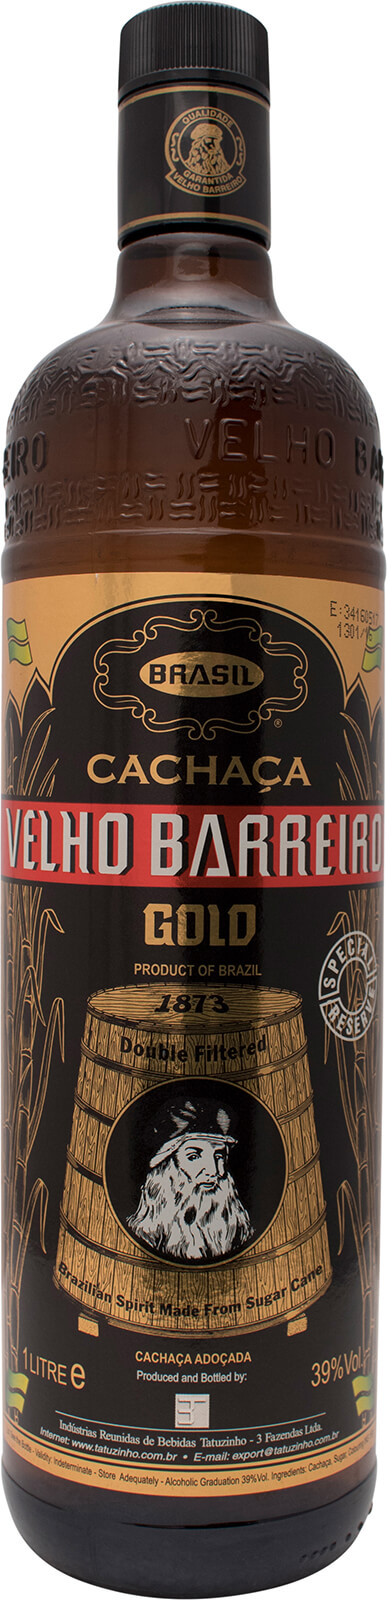 Velho Barreiro Cachaca Gold (3 Jahre) 1 Liter 39%